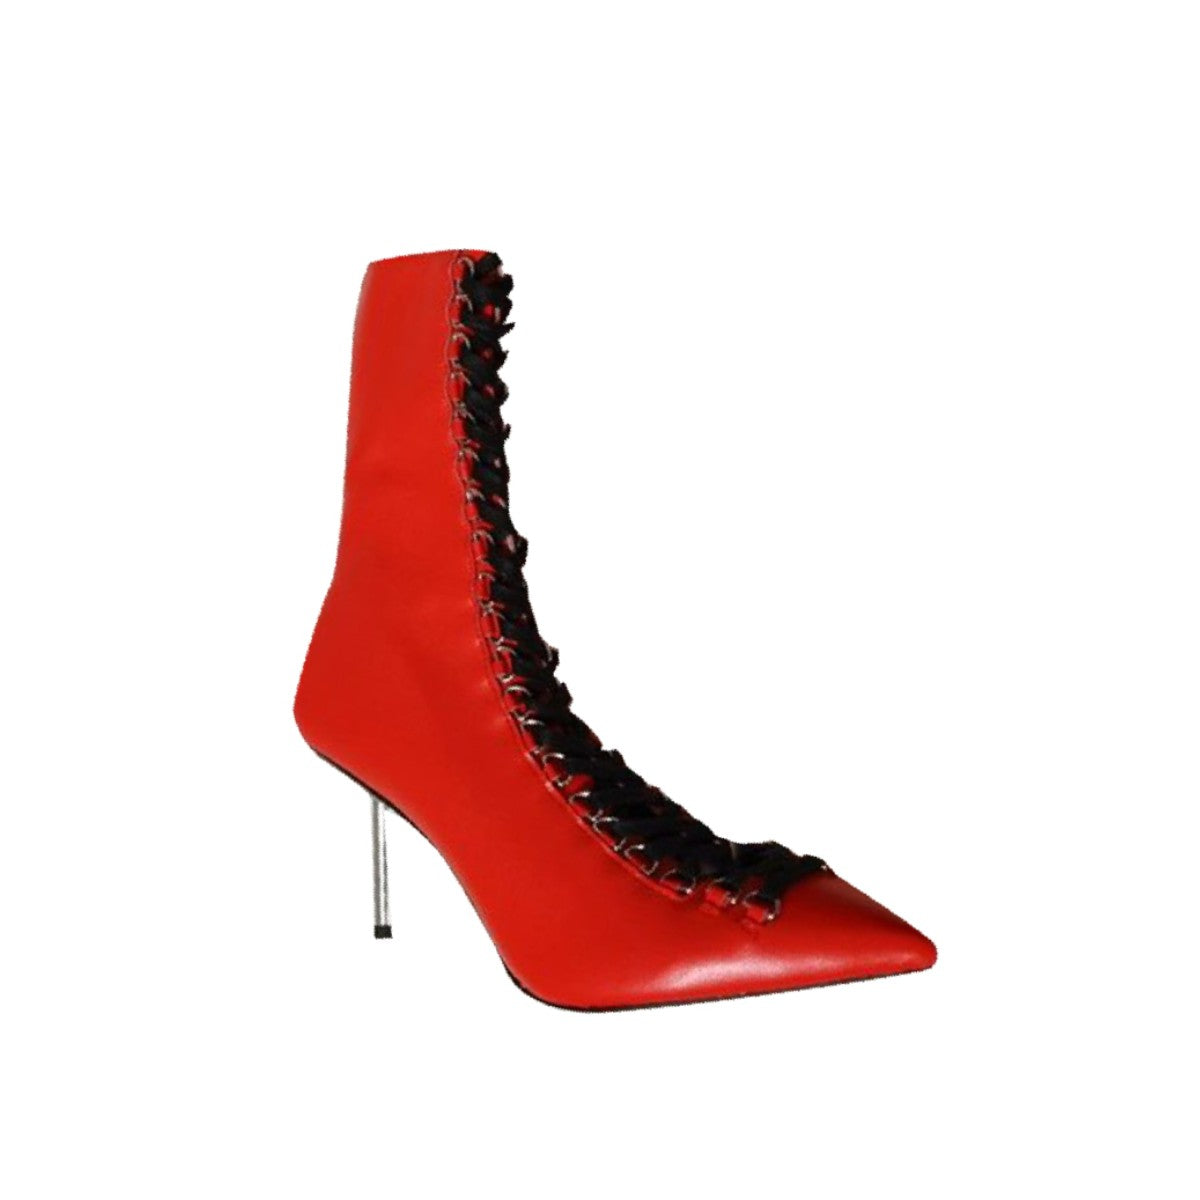 Guess High heeled ankle boots - black - Zalando.de